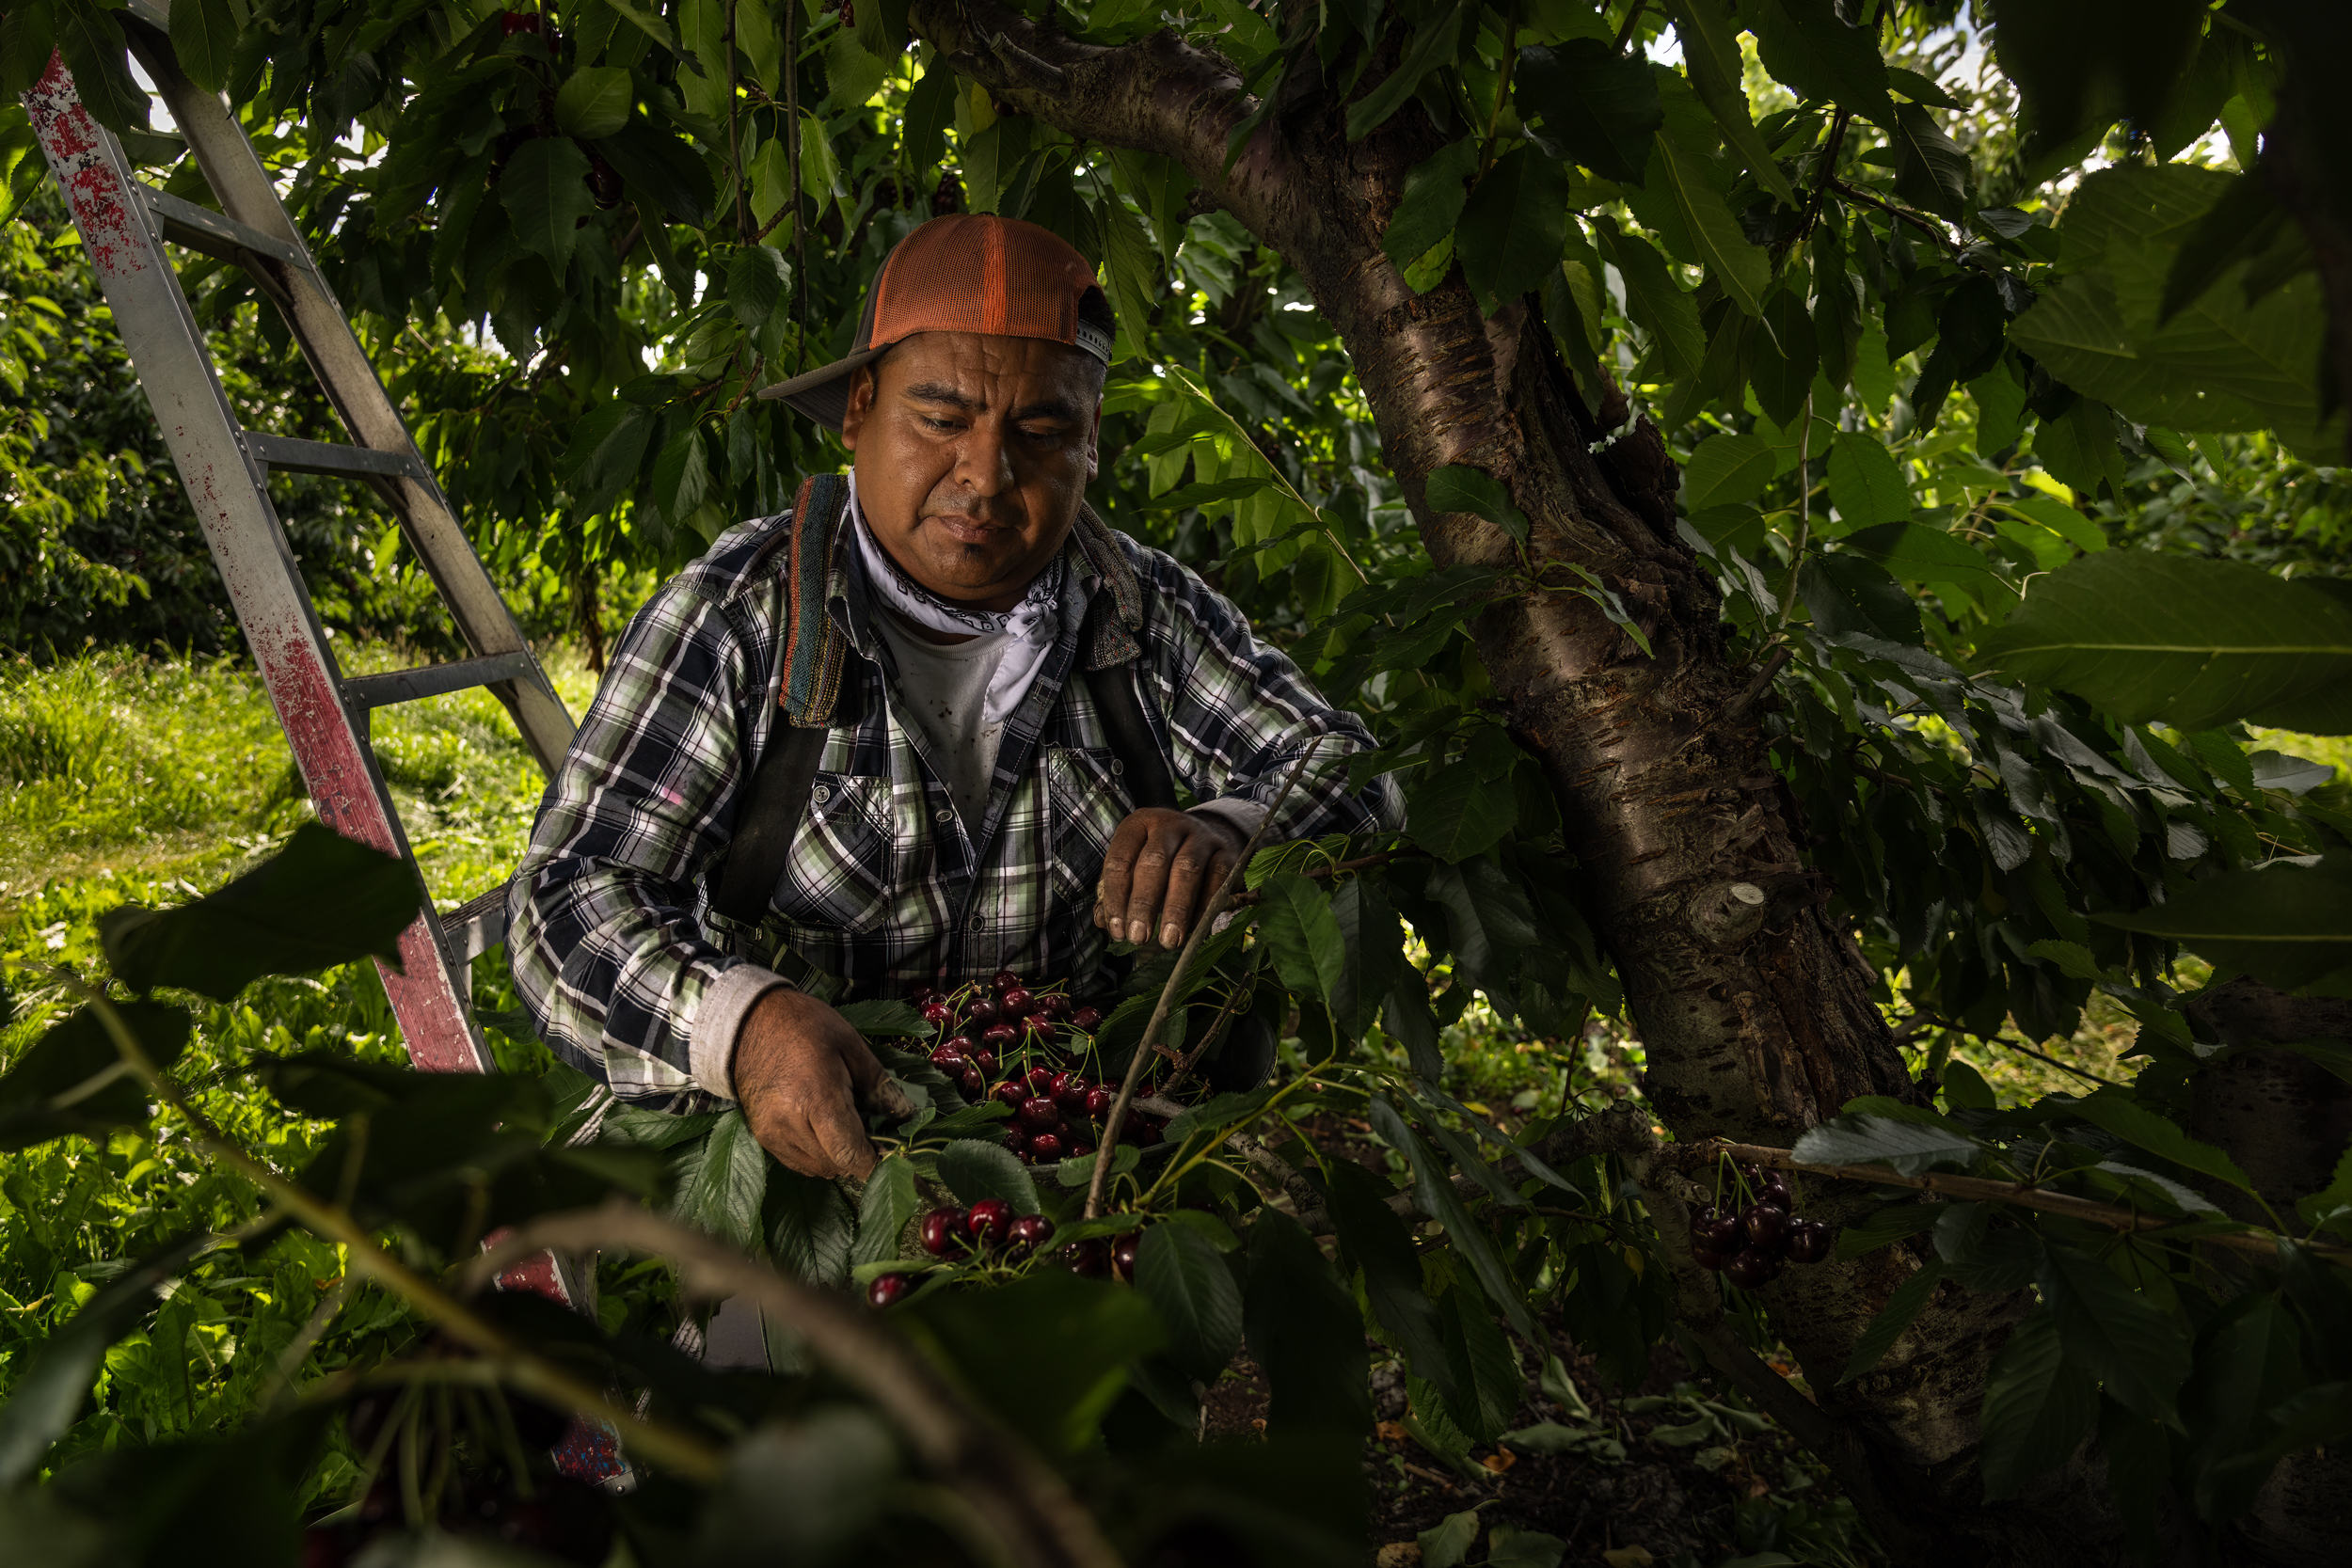 Photography of cherry harvest for Superfresh Growers in Yakima, Washington